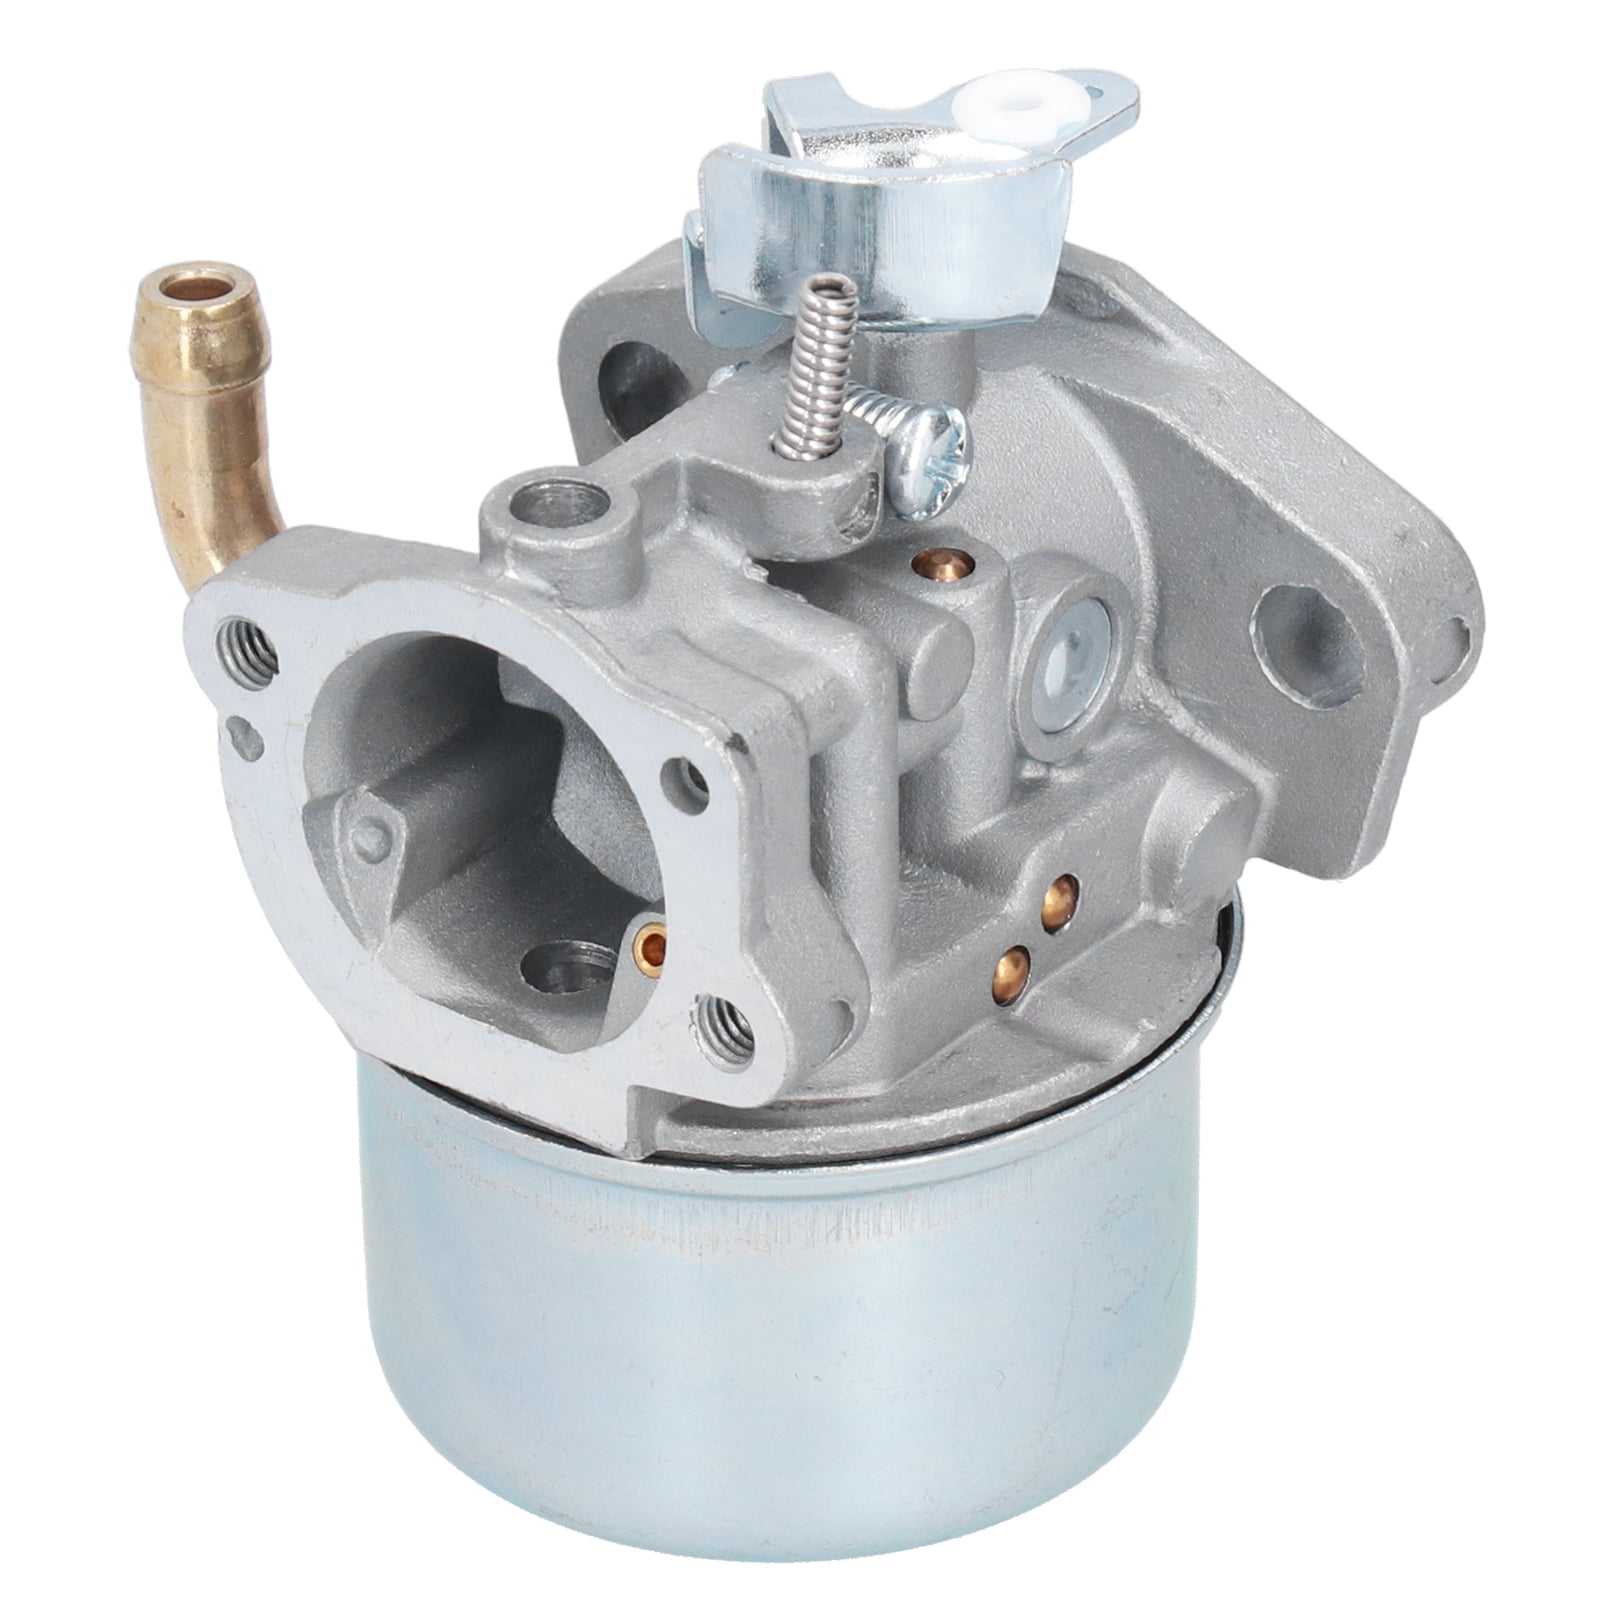 Carburetor Air Filter Fuel Line Tune-Up Parts Kit for Briggs & Stratton 791077 696981 Intek 190 6 HP 206 5.5hp Carb Motor 6.5 HP Power Craftsman Tiller Washer Go Kart Engine Generator 